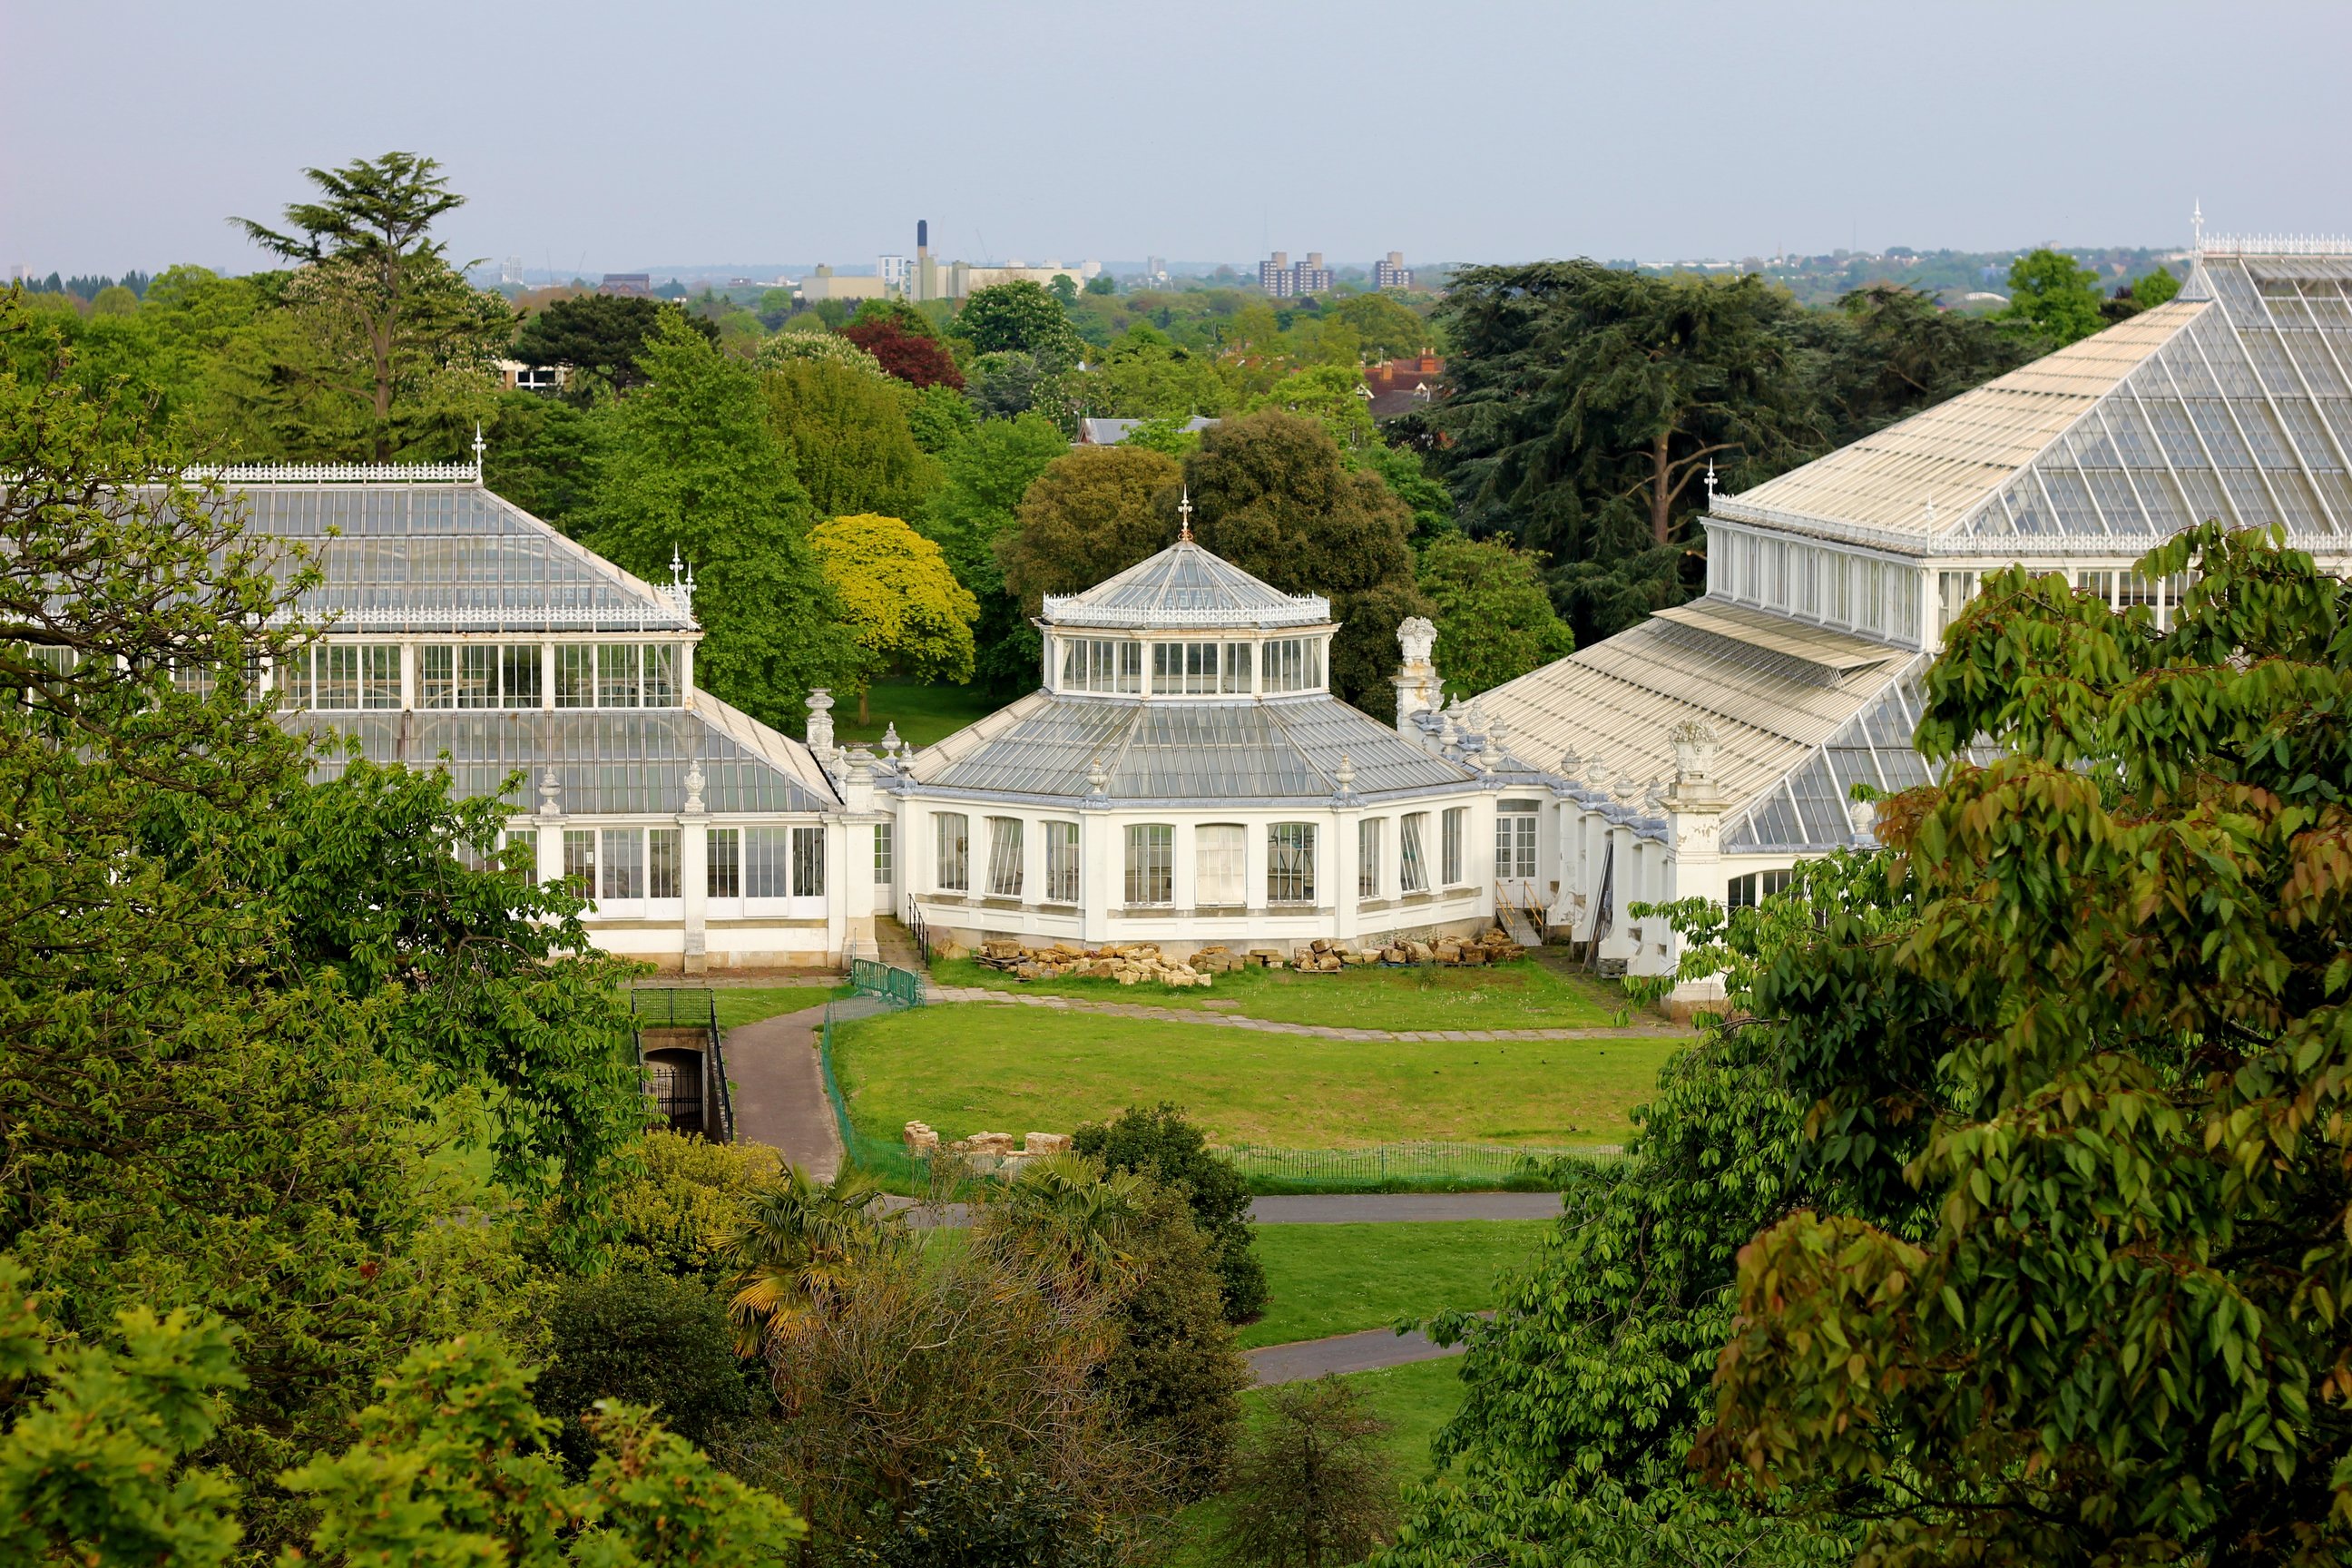 The Glasshouse in Kew Gardens